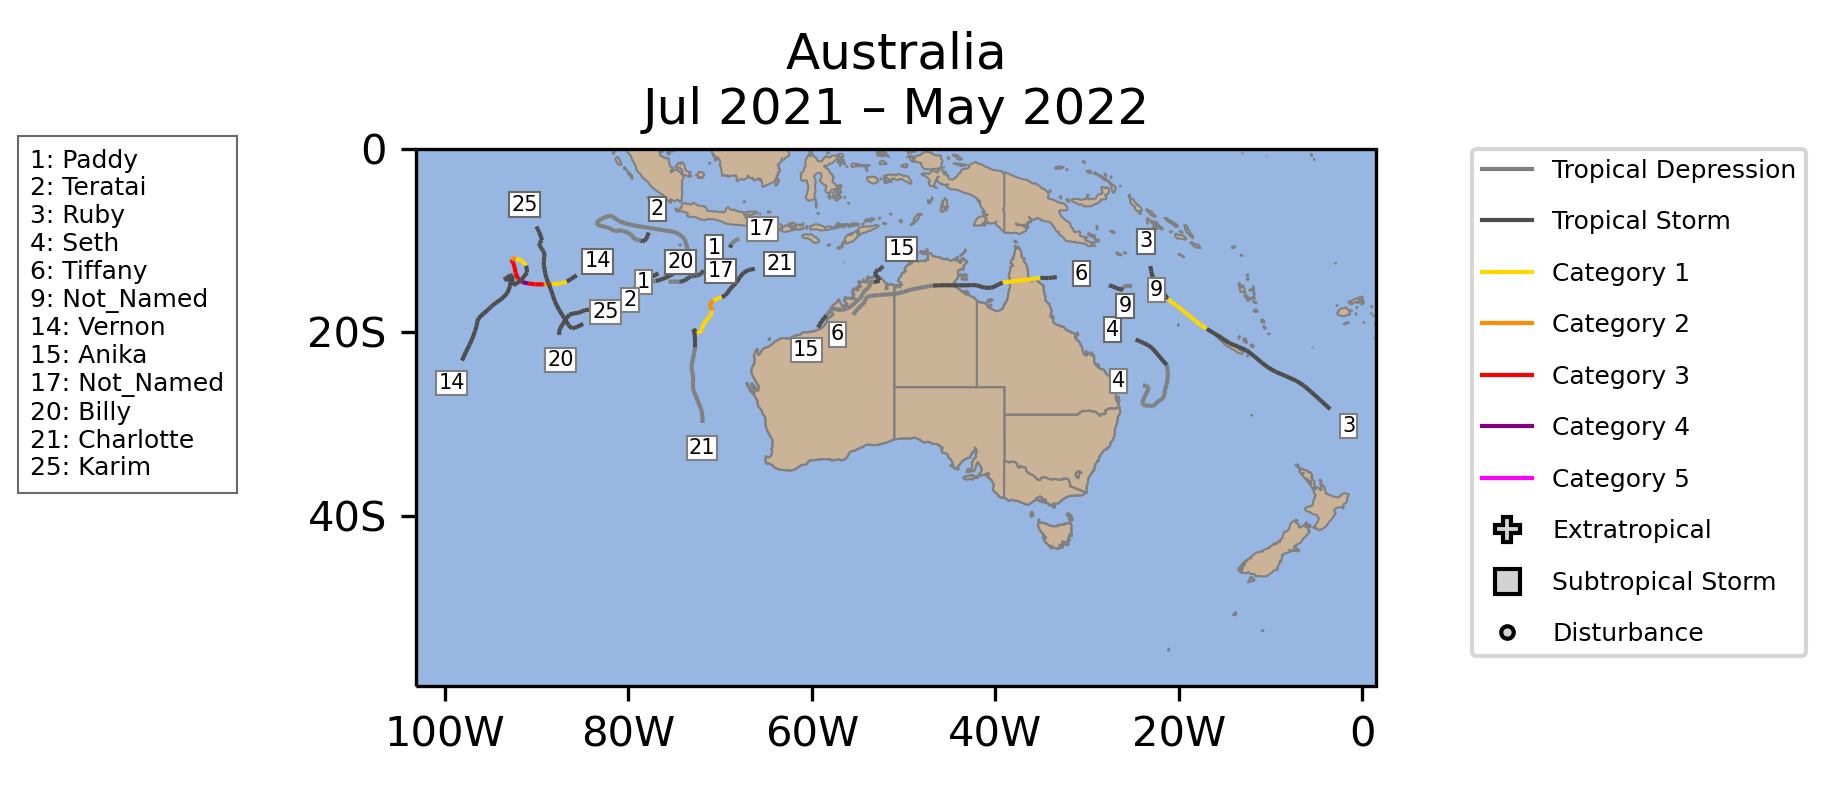 Australia Tropical Cyclone Storm Tracks July 2021-May 2022